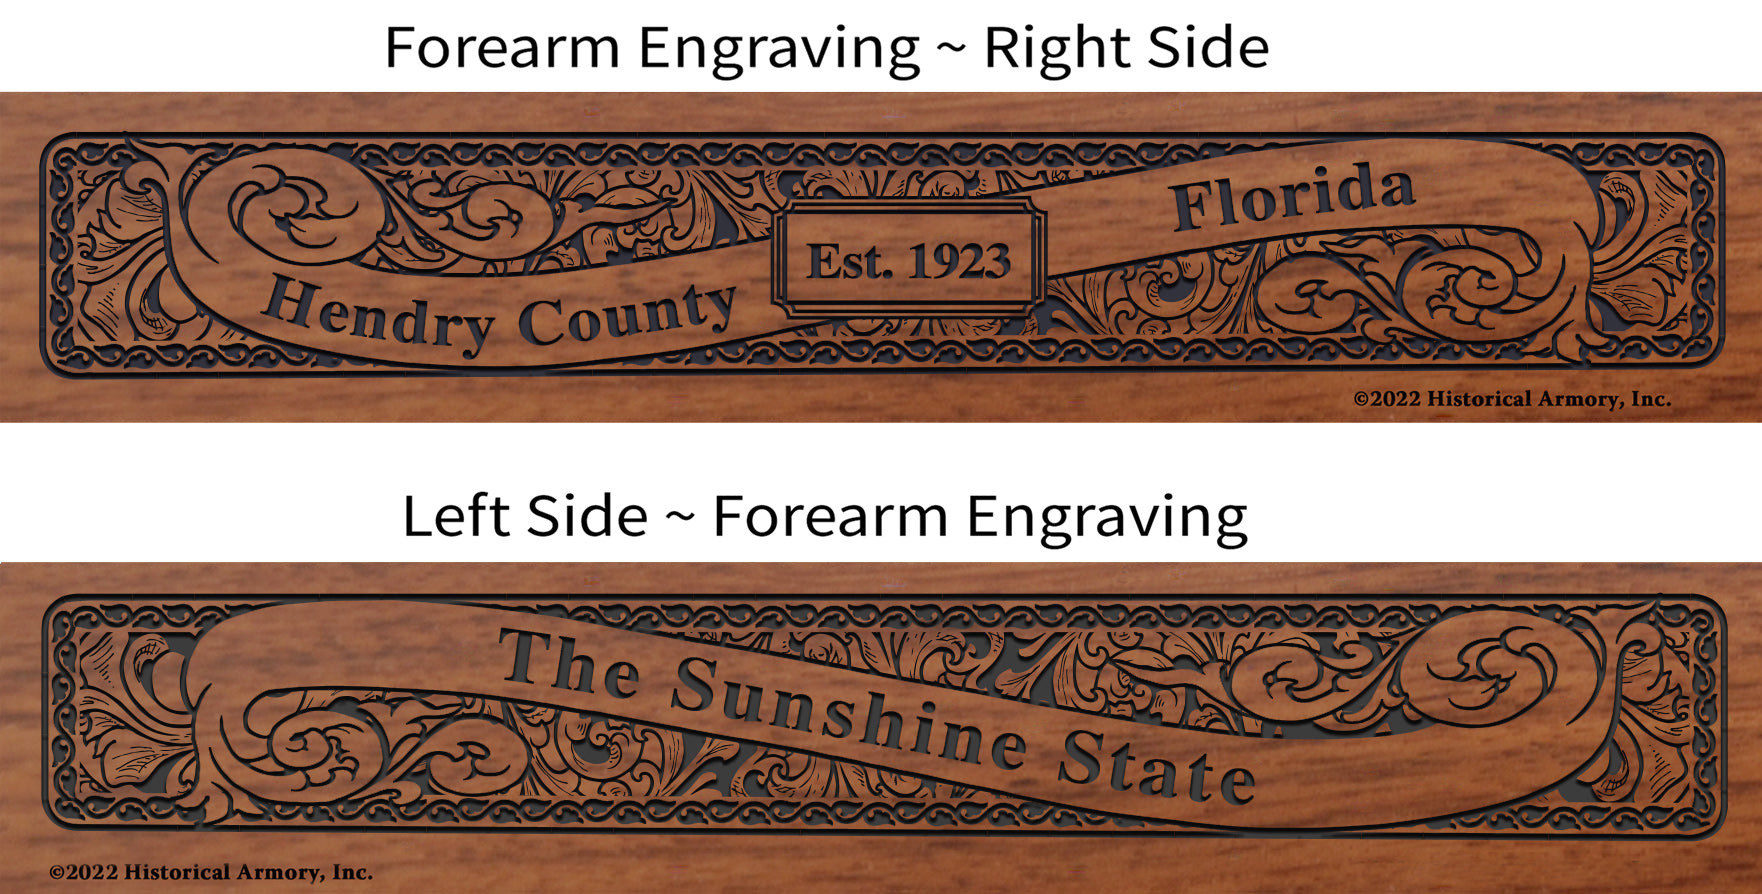 Hendry County Florida Engraved Rifle Forearm